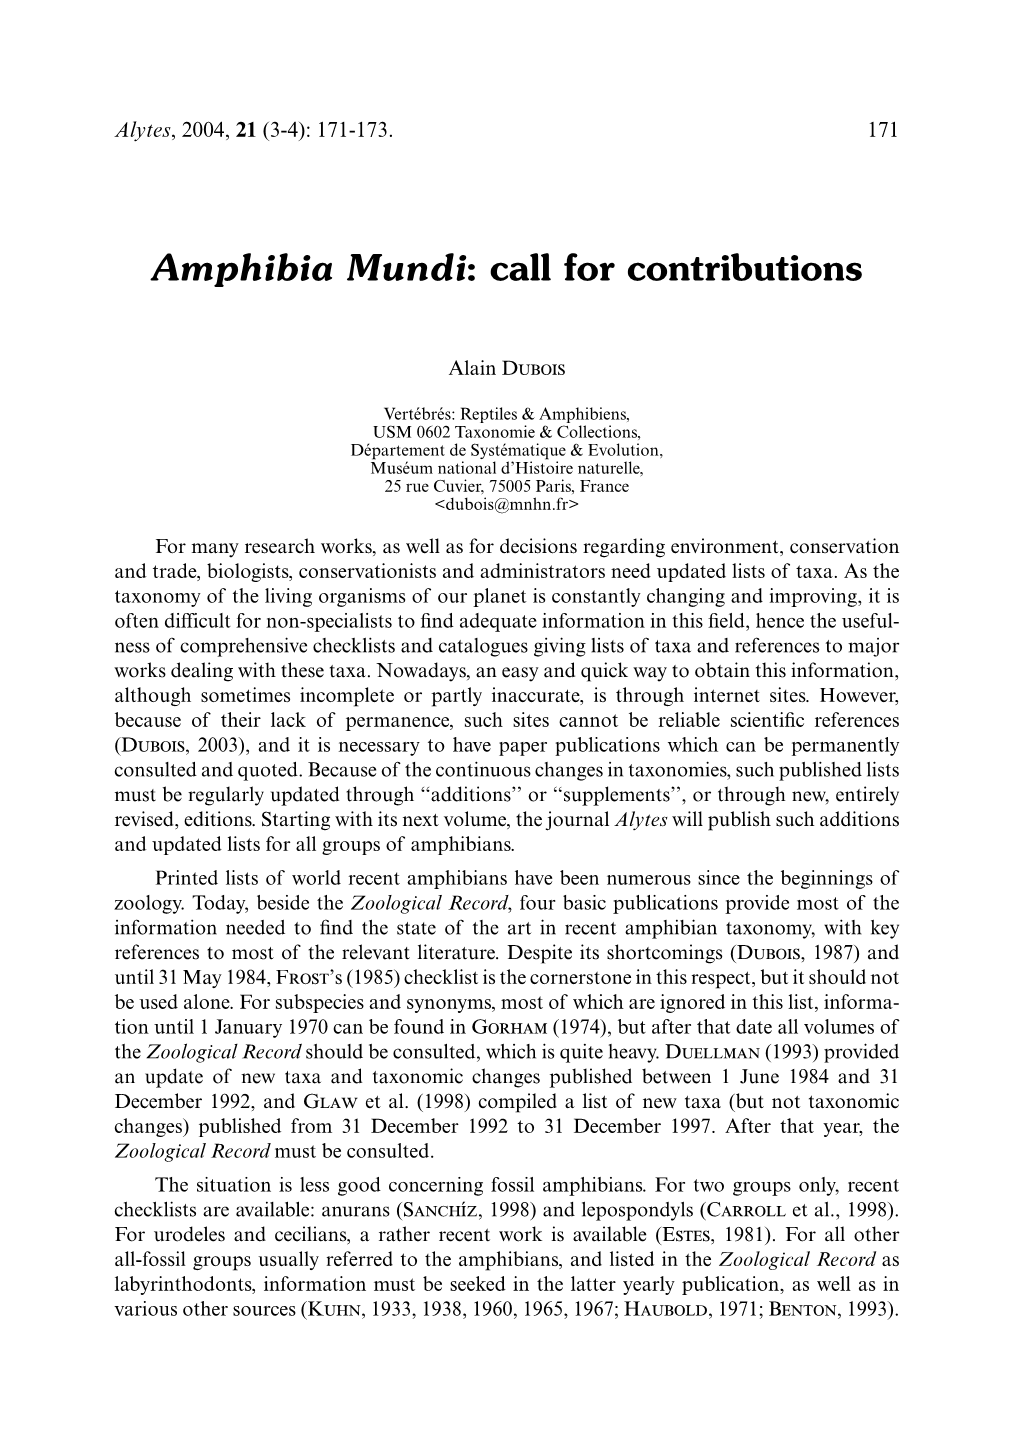 Amphibia Mundi: Call for Contributions